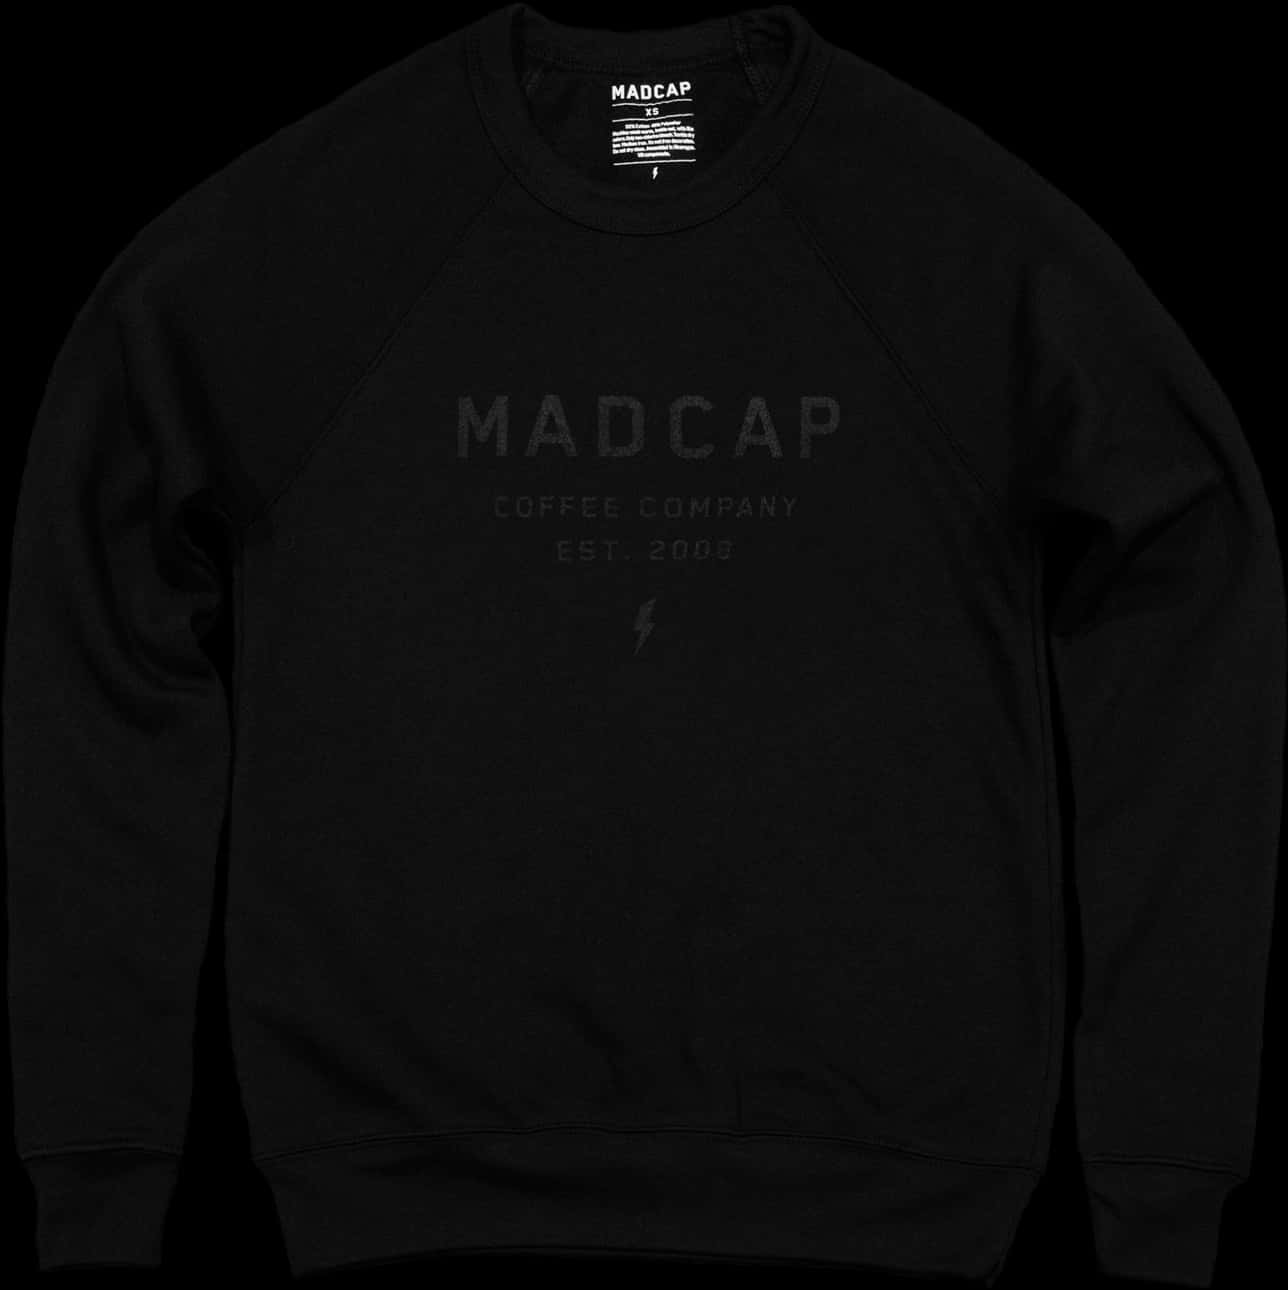 A Black Sweatshirt With A Logo On It